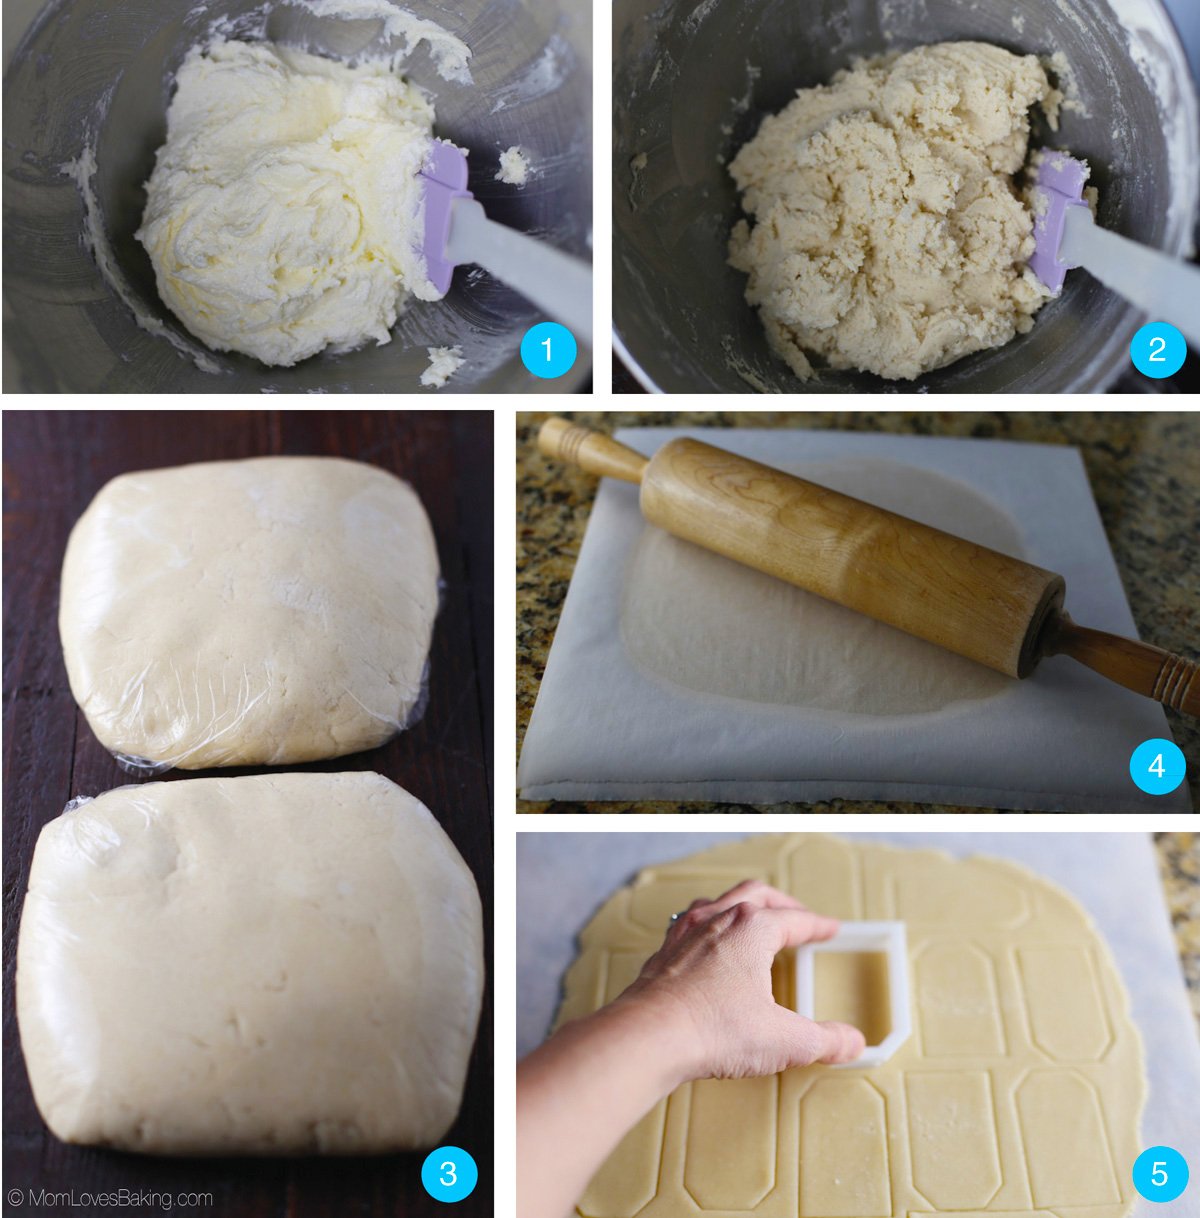 Steps showing how to make tea bag sugar cookies.